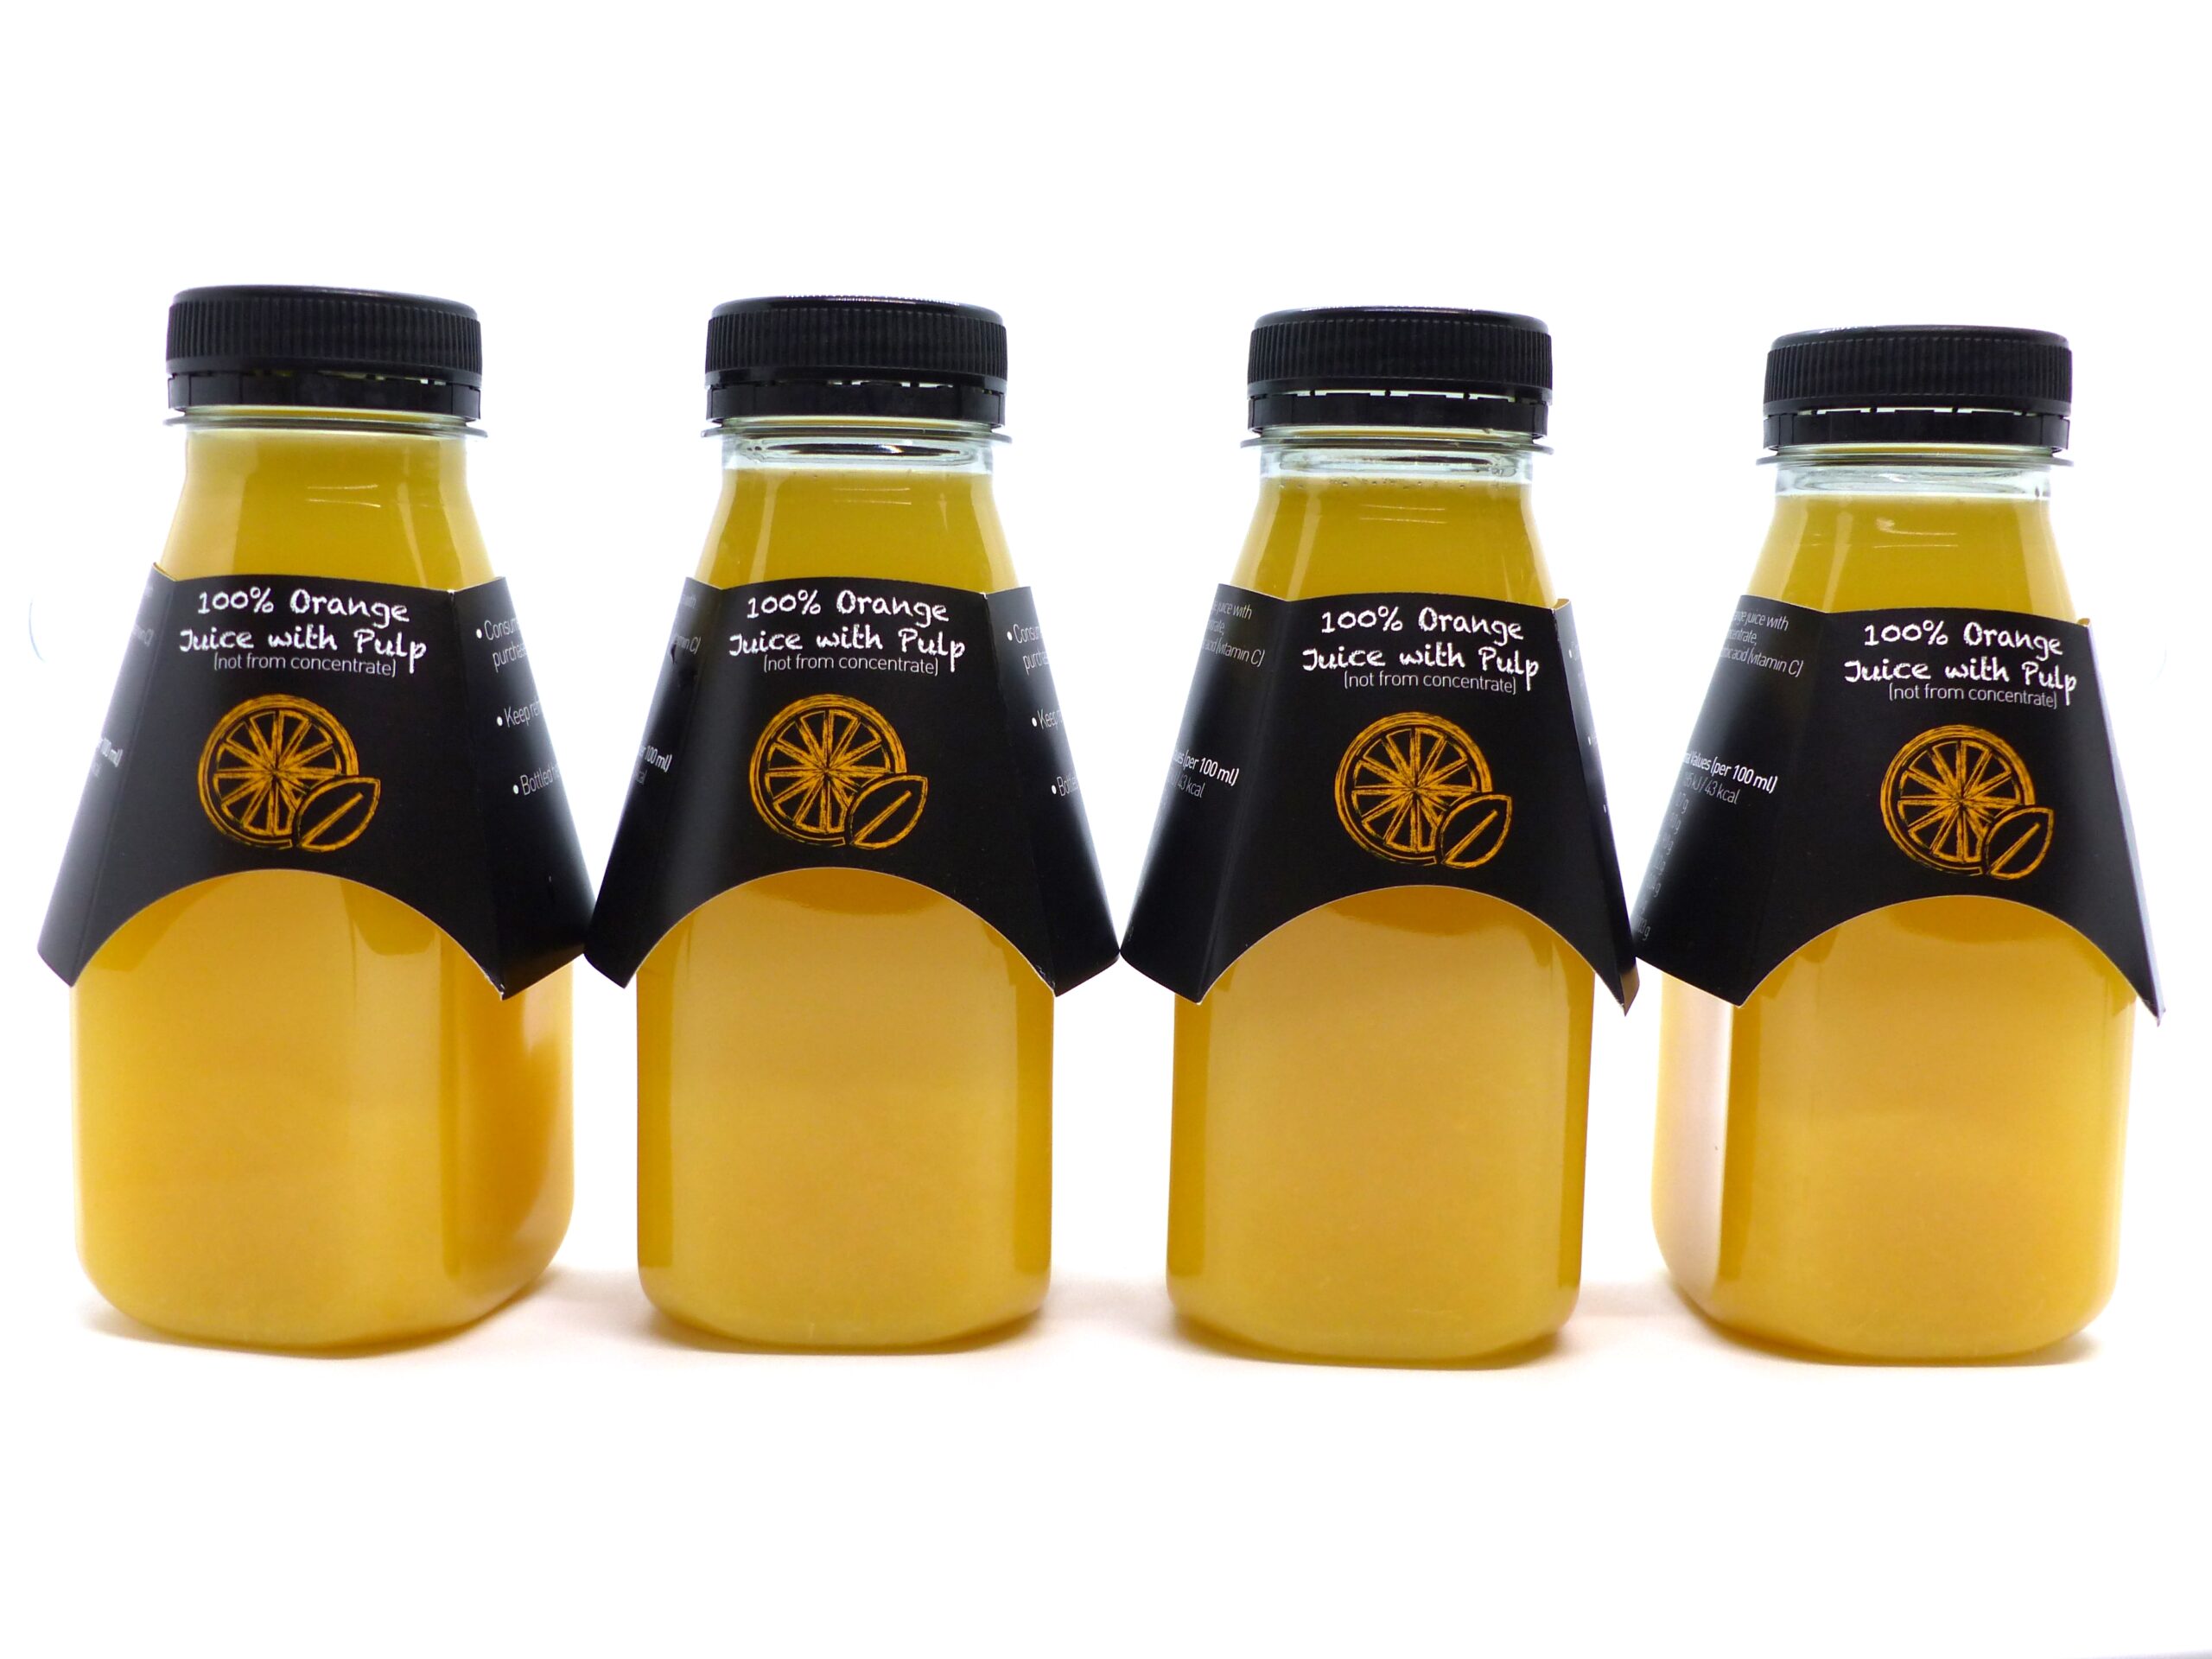 Orange Juice in Arc Bottle with Display Collar from Oranka Juice Solutions